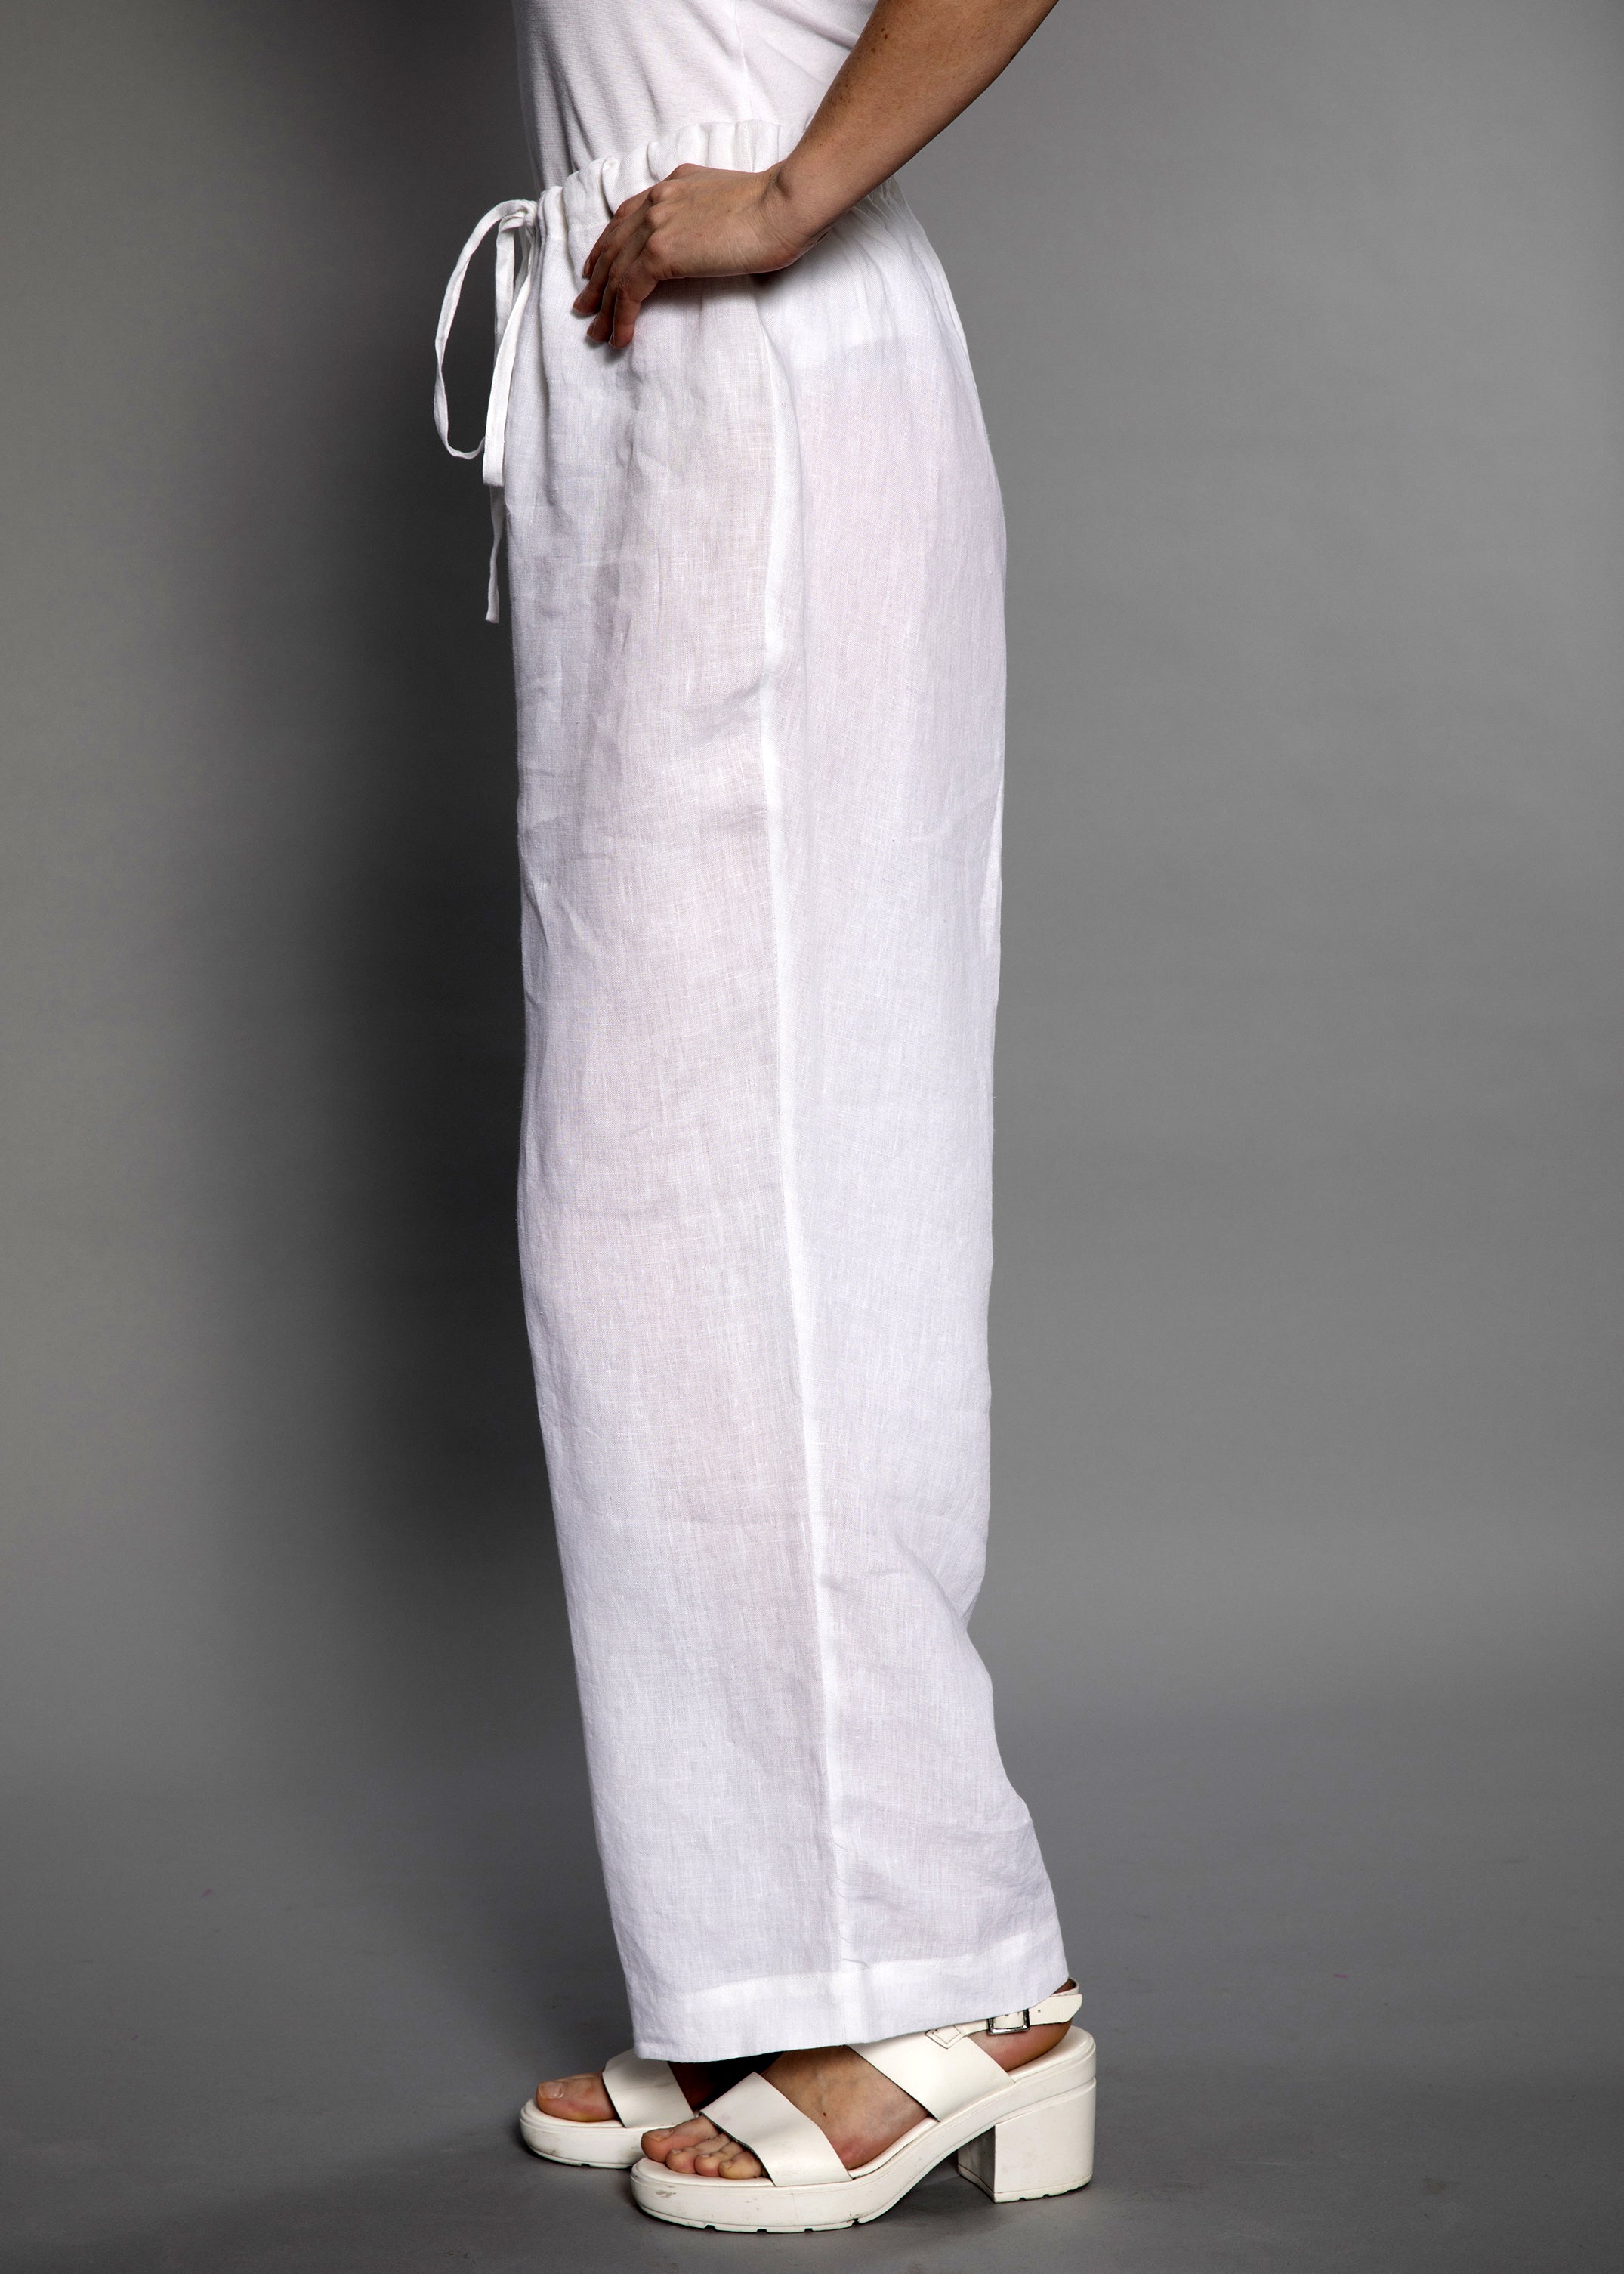 HAILEY BIEBER DROP | medium white drawstring trousers – remass